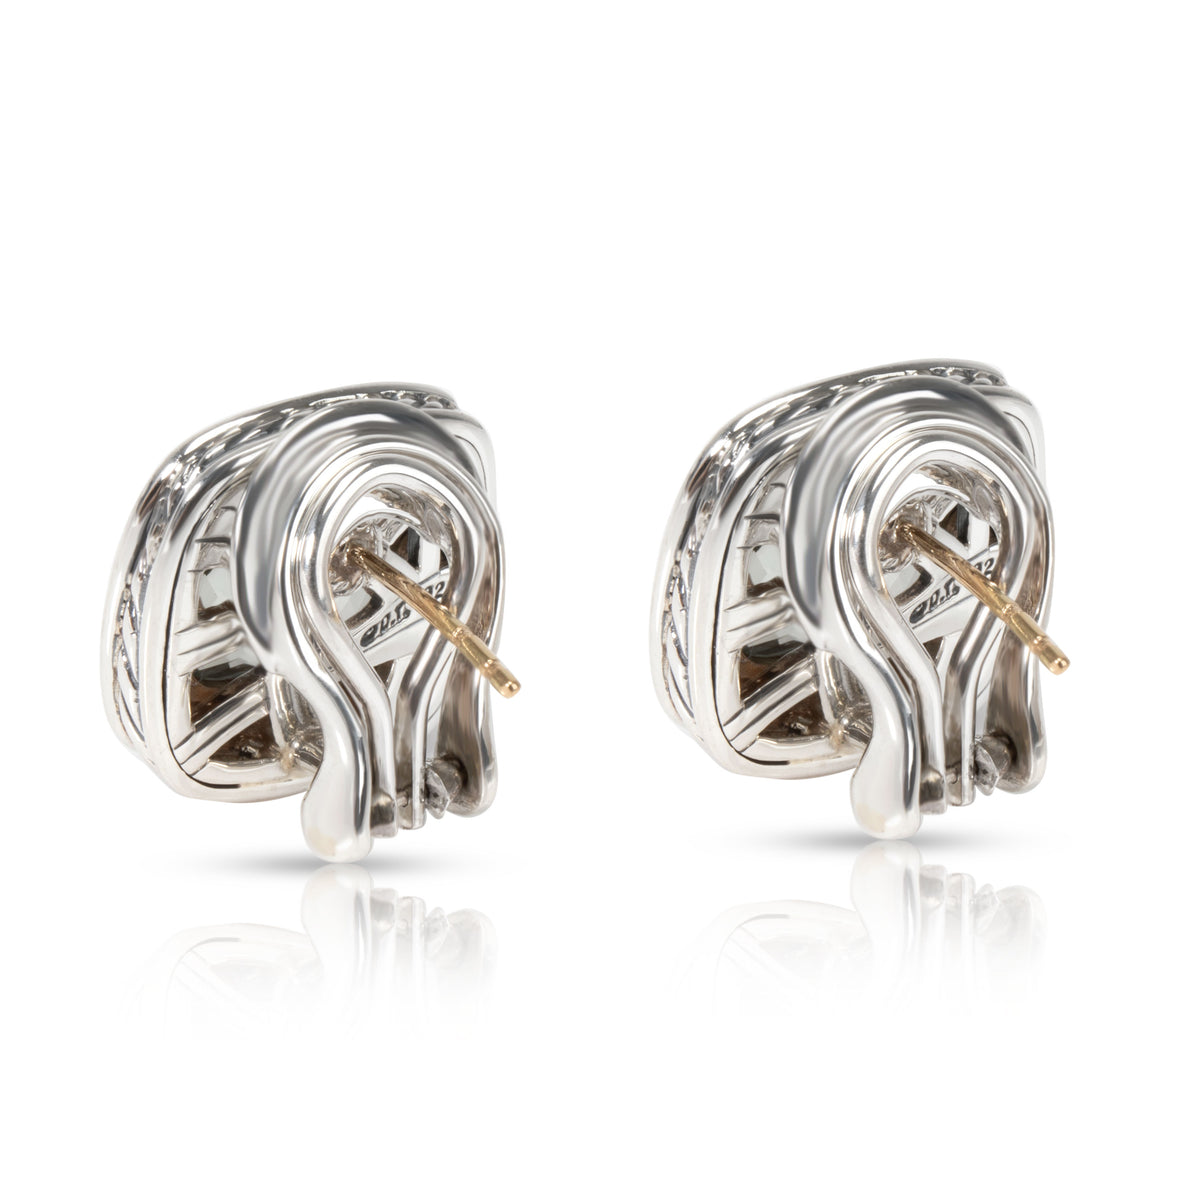 David Yurman Albion Prasiolite & Diamond Earrings in  Sterling Silver 0.64 CTW